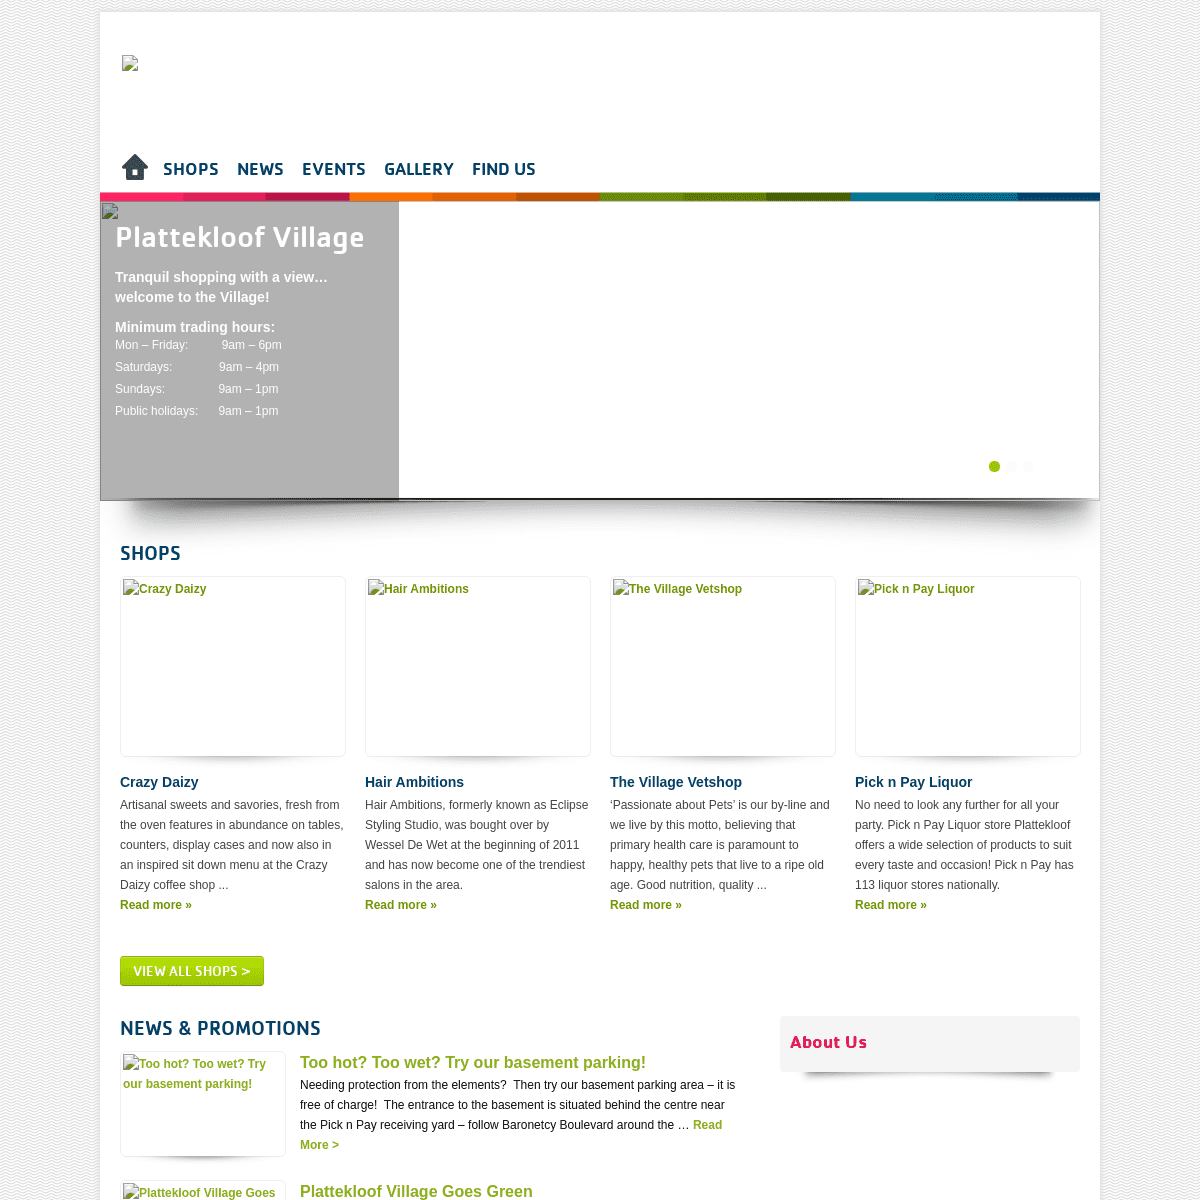 A complete backup of http://plattekloofvillage.azurewebsites.net/